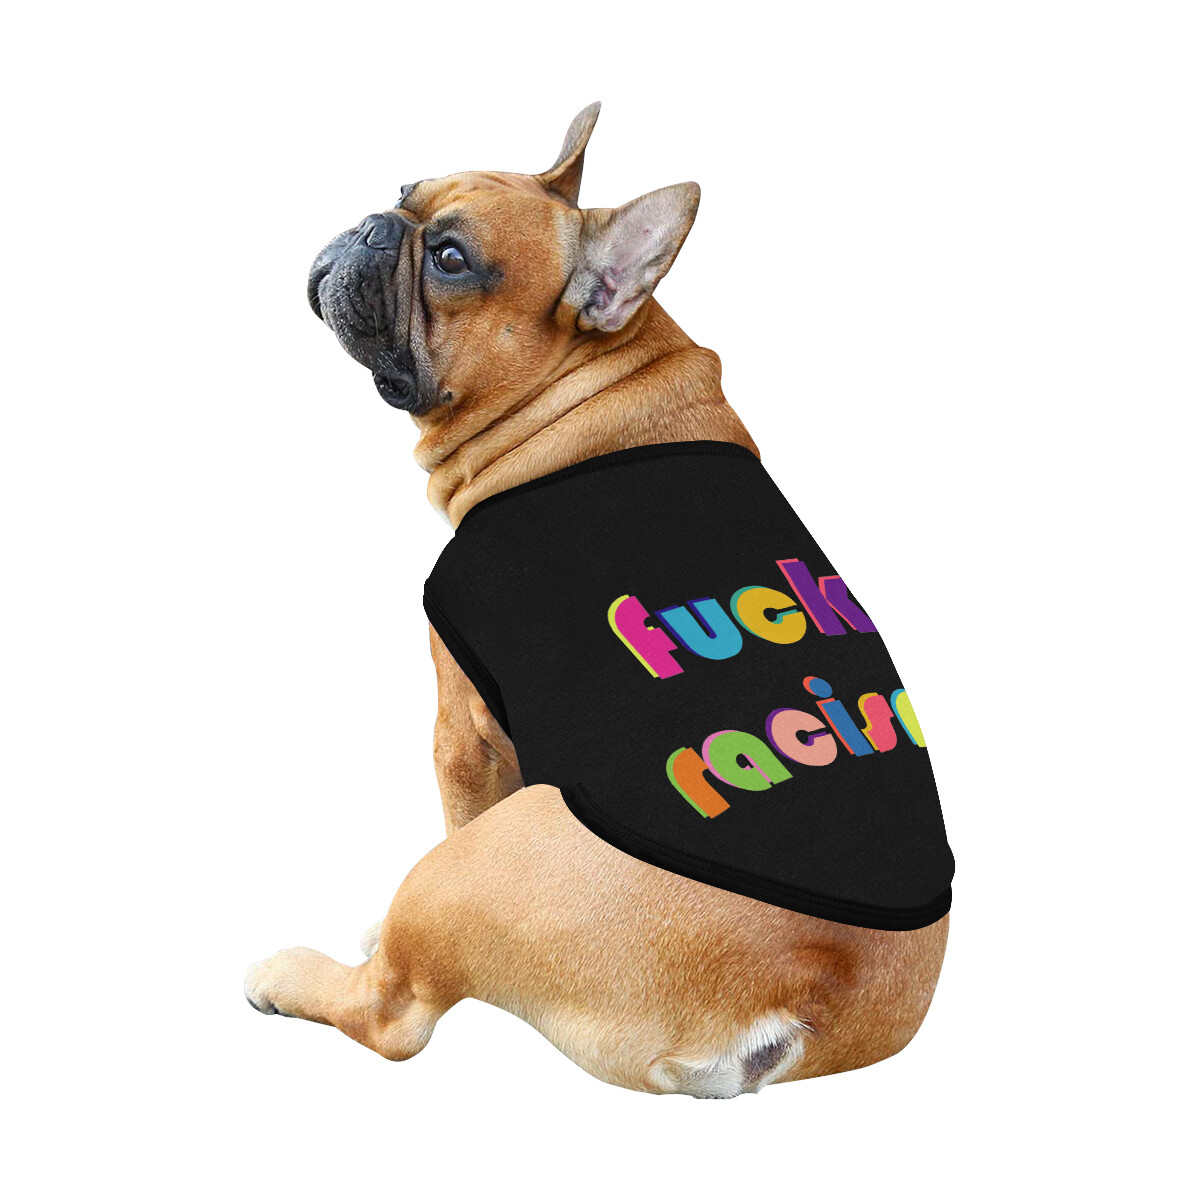 🐕 Fuck Racism Dog shirt, Dog Tank Top, Dog t-shirt, Dog clothes, Gifts, front back print, 7 sizes XS to 3XL, dog gifts, black